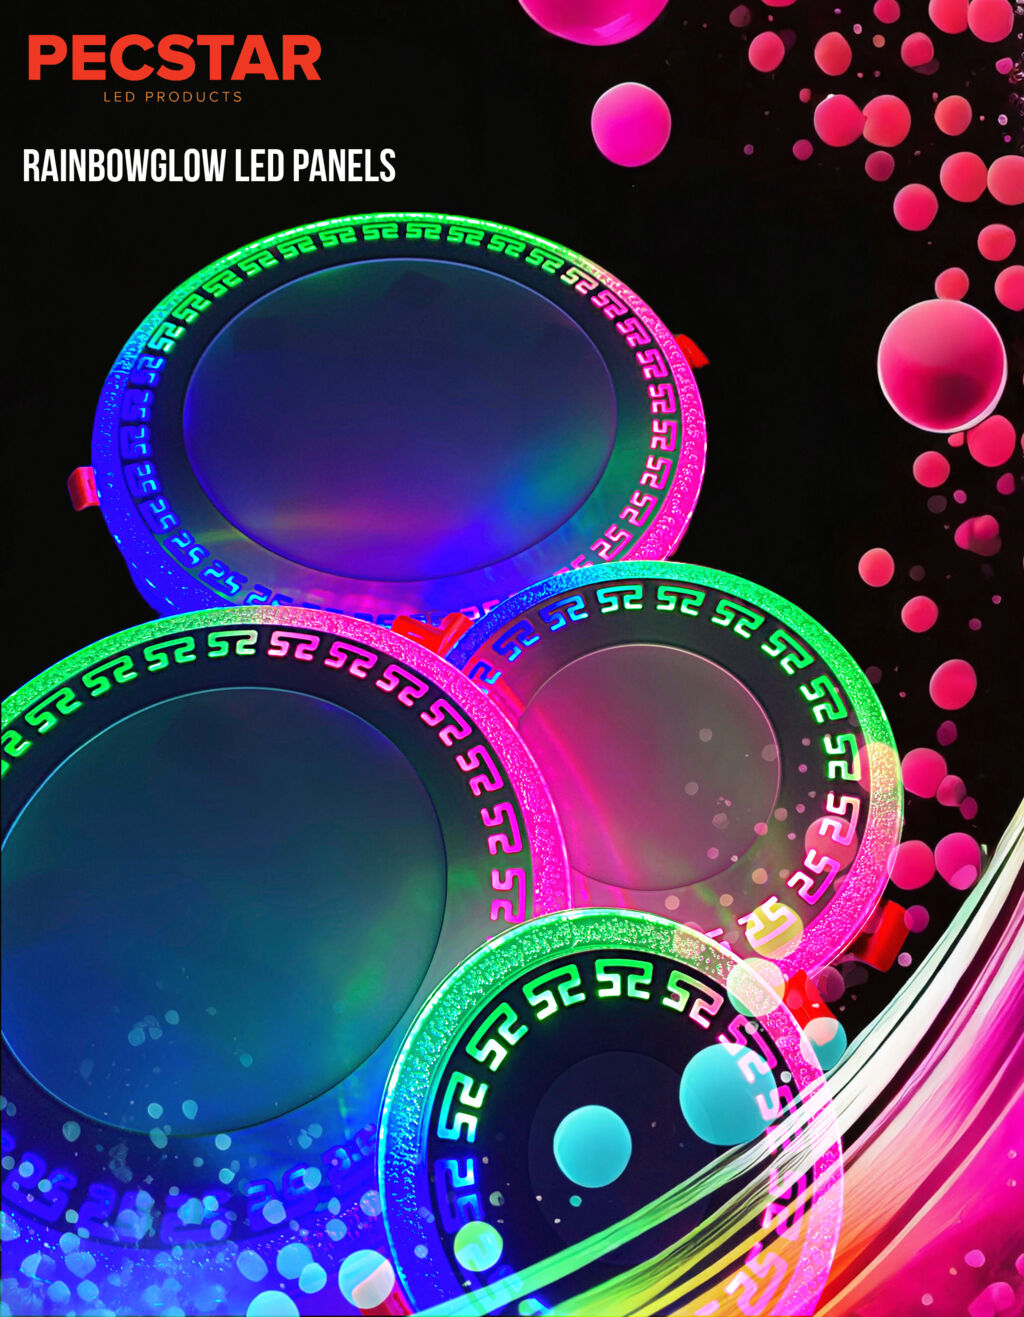 RainbowGlow LED Panels Range